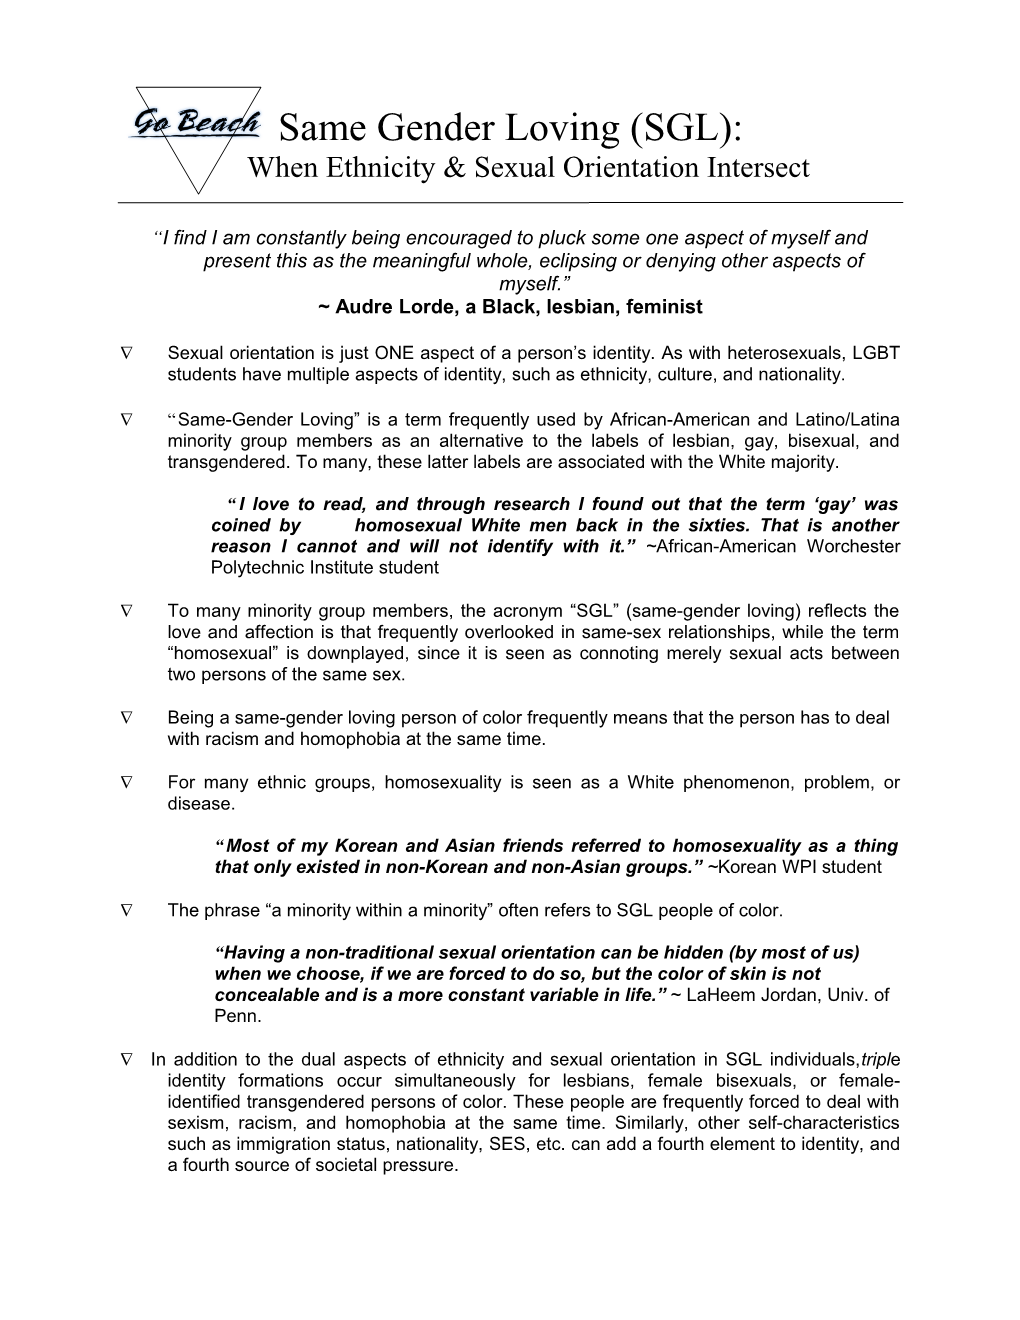 Same Gender Loving (SGL):When Ethnicity & Sexual Orientation Intersect